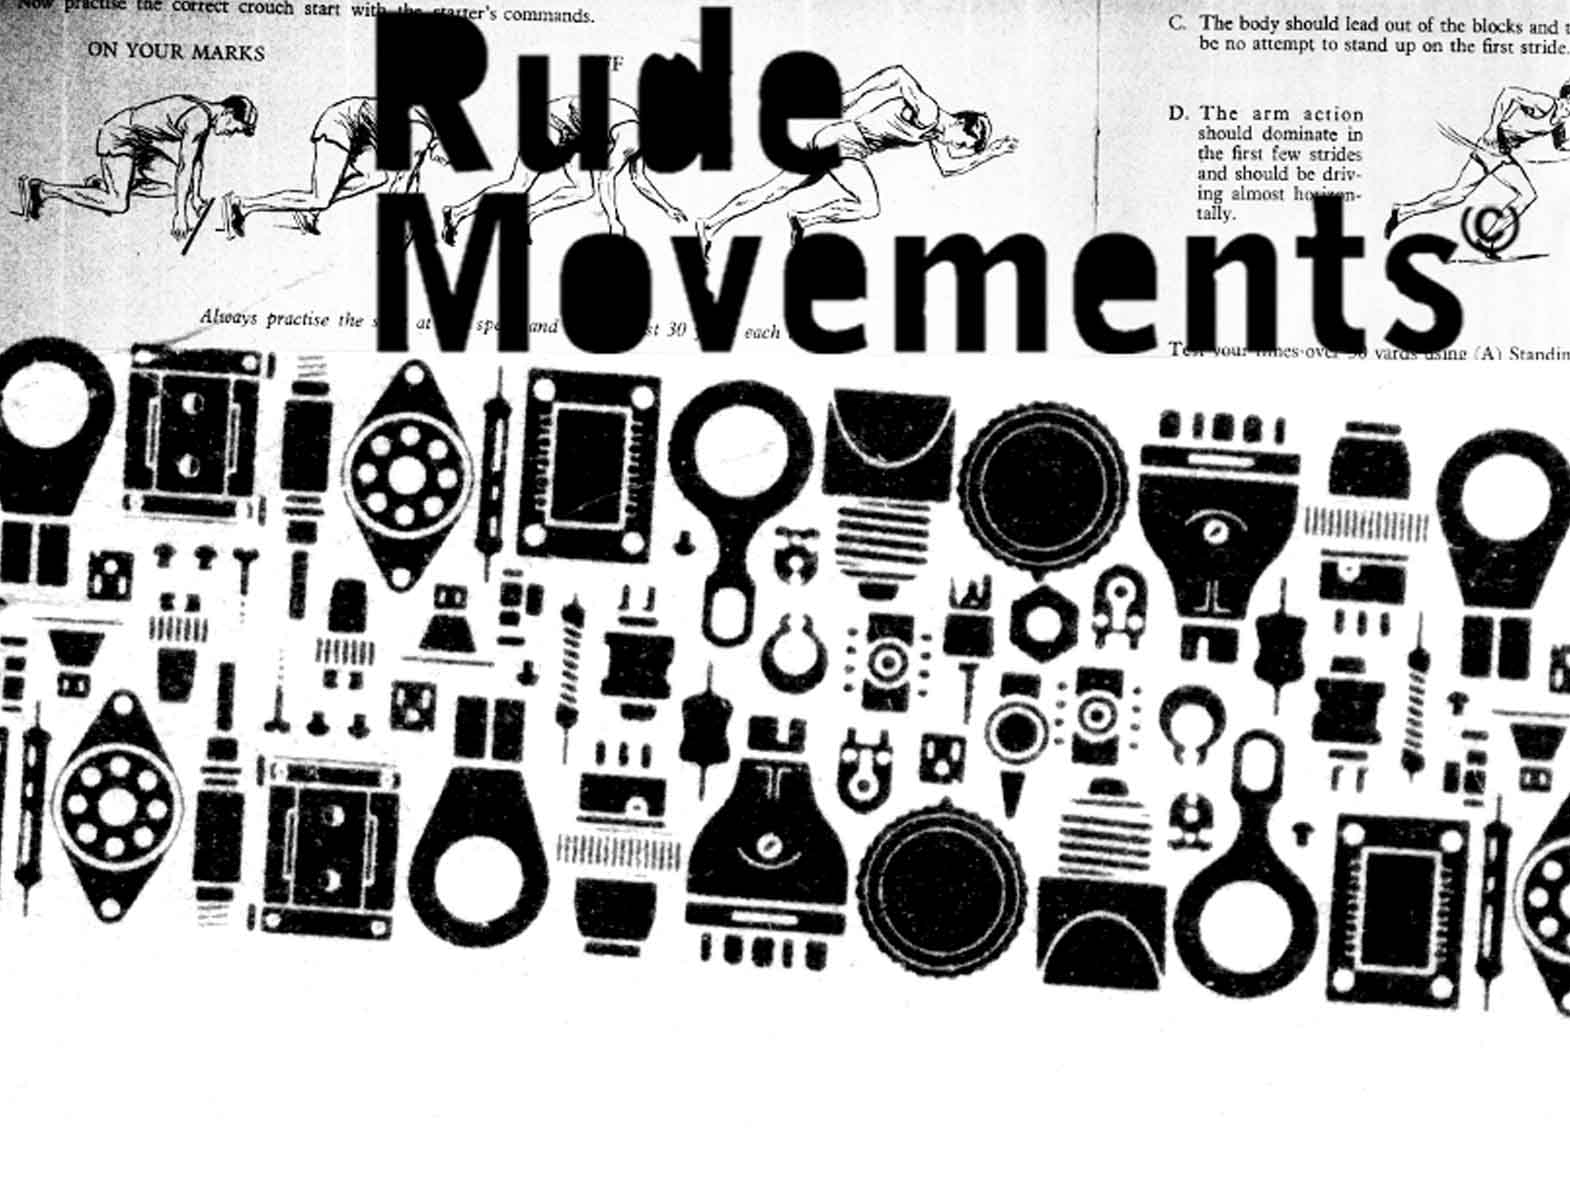 Rude Movements